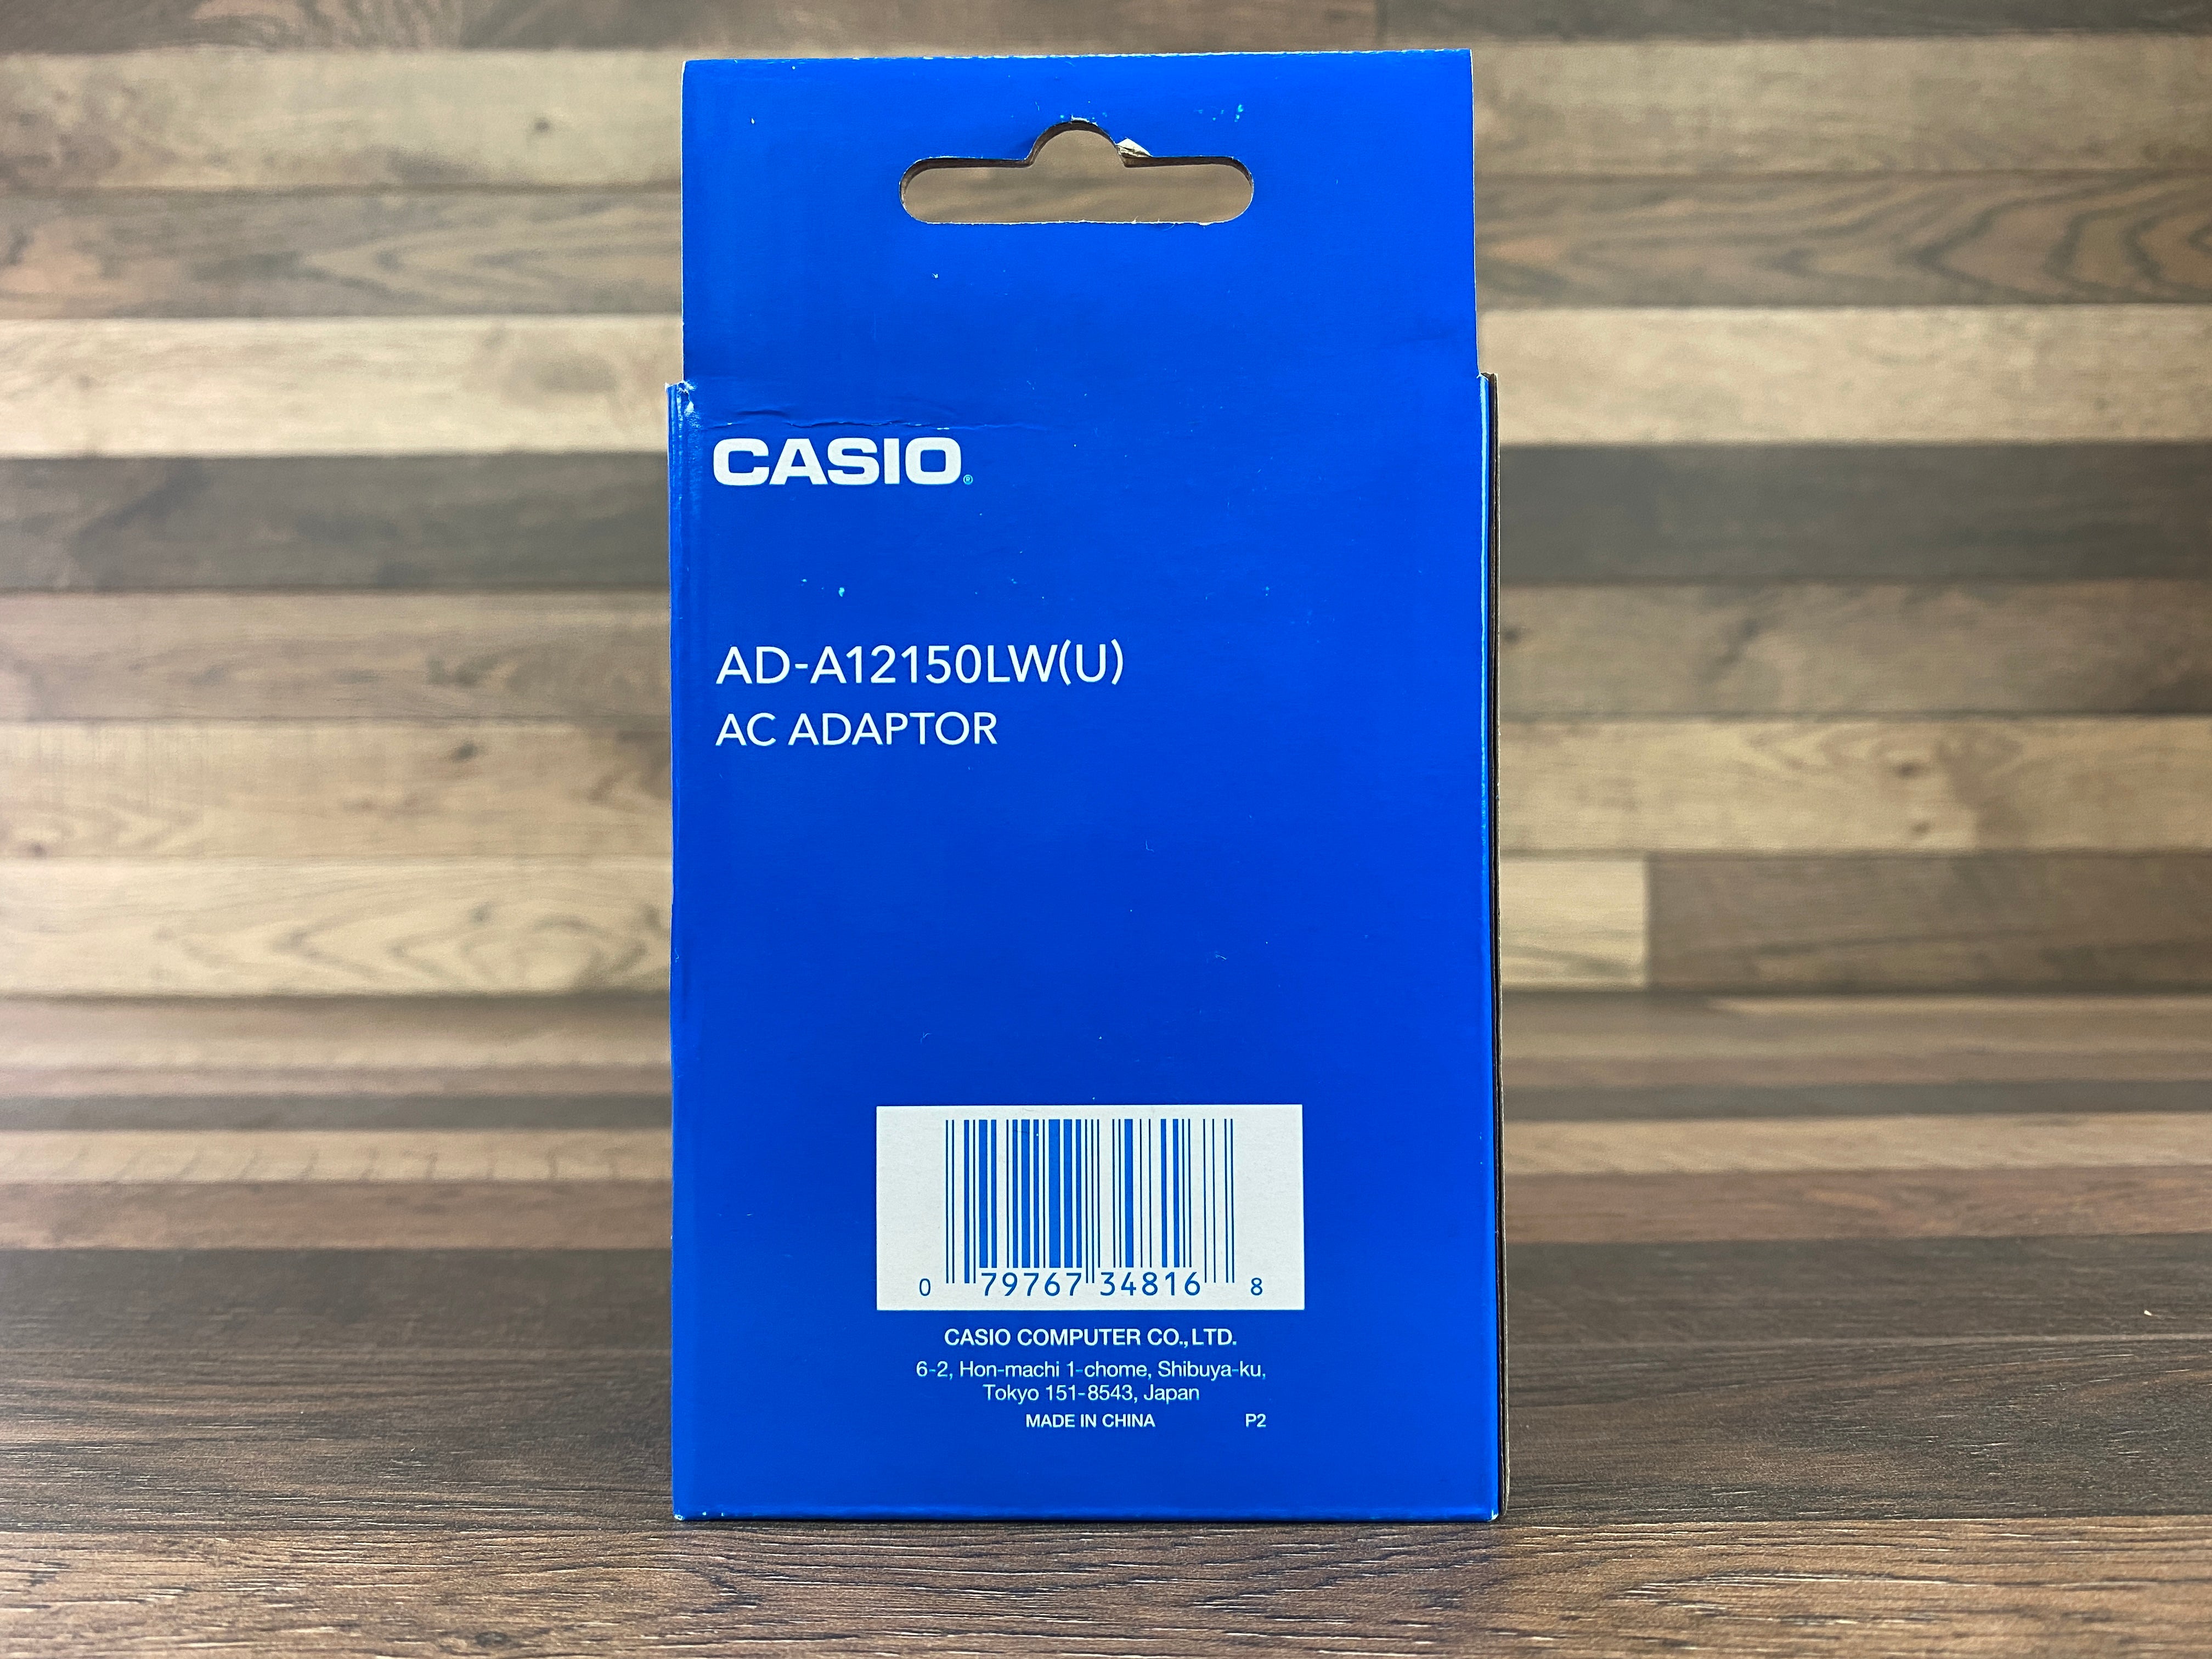 Casio AD-A12150LW(U) AC Adapter - Input AC 100-240V Output DC 12V